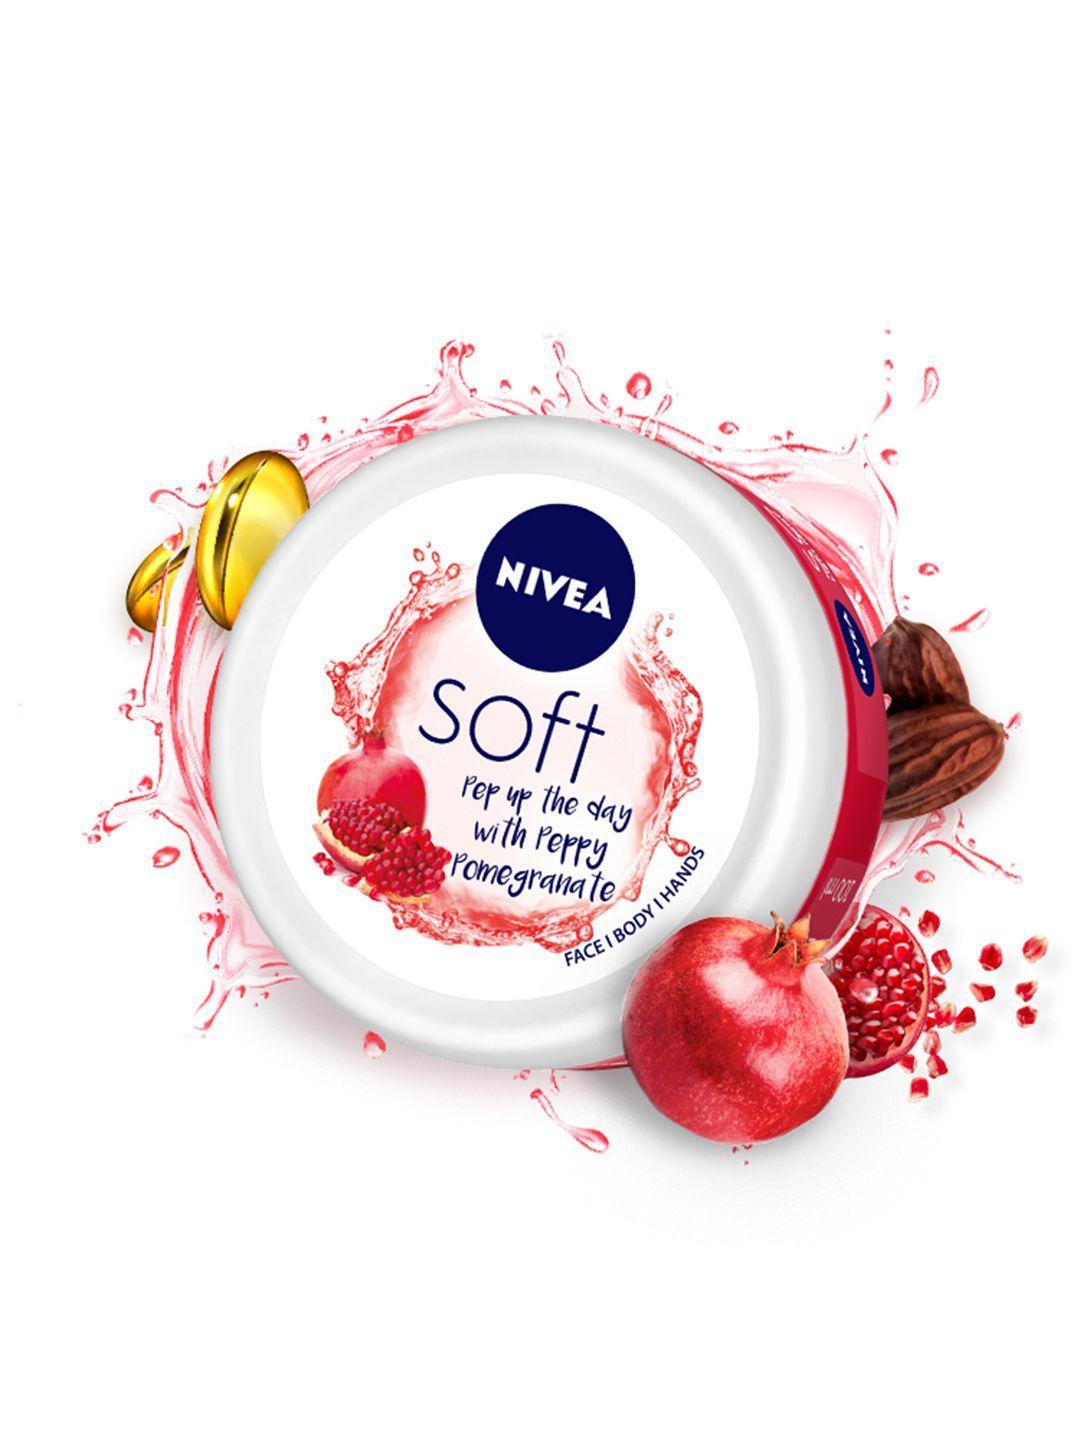 nivea soft light moisturizer cream - peppy pomegranate - for face hands & body - 100 ml